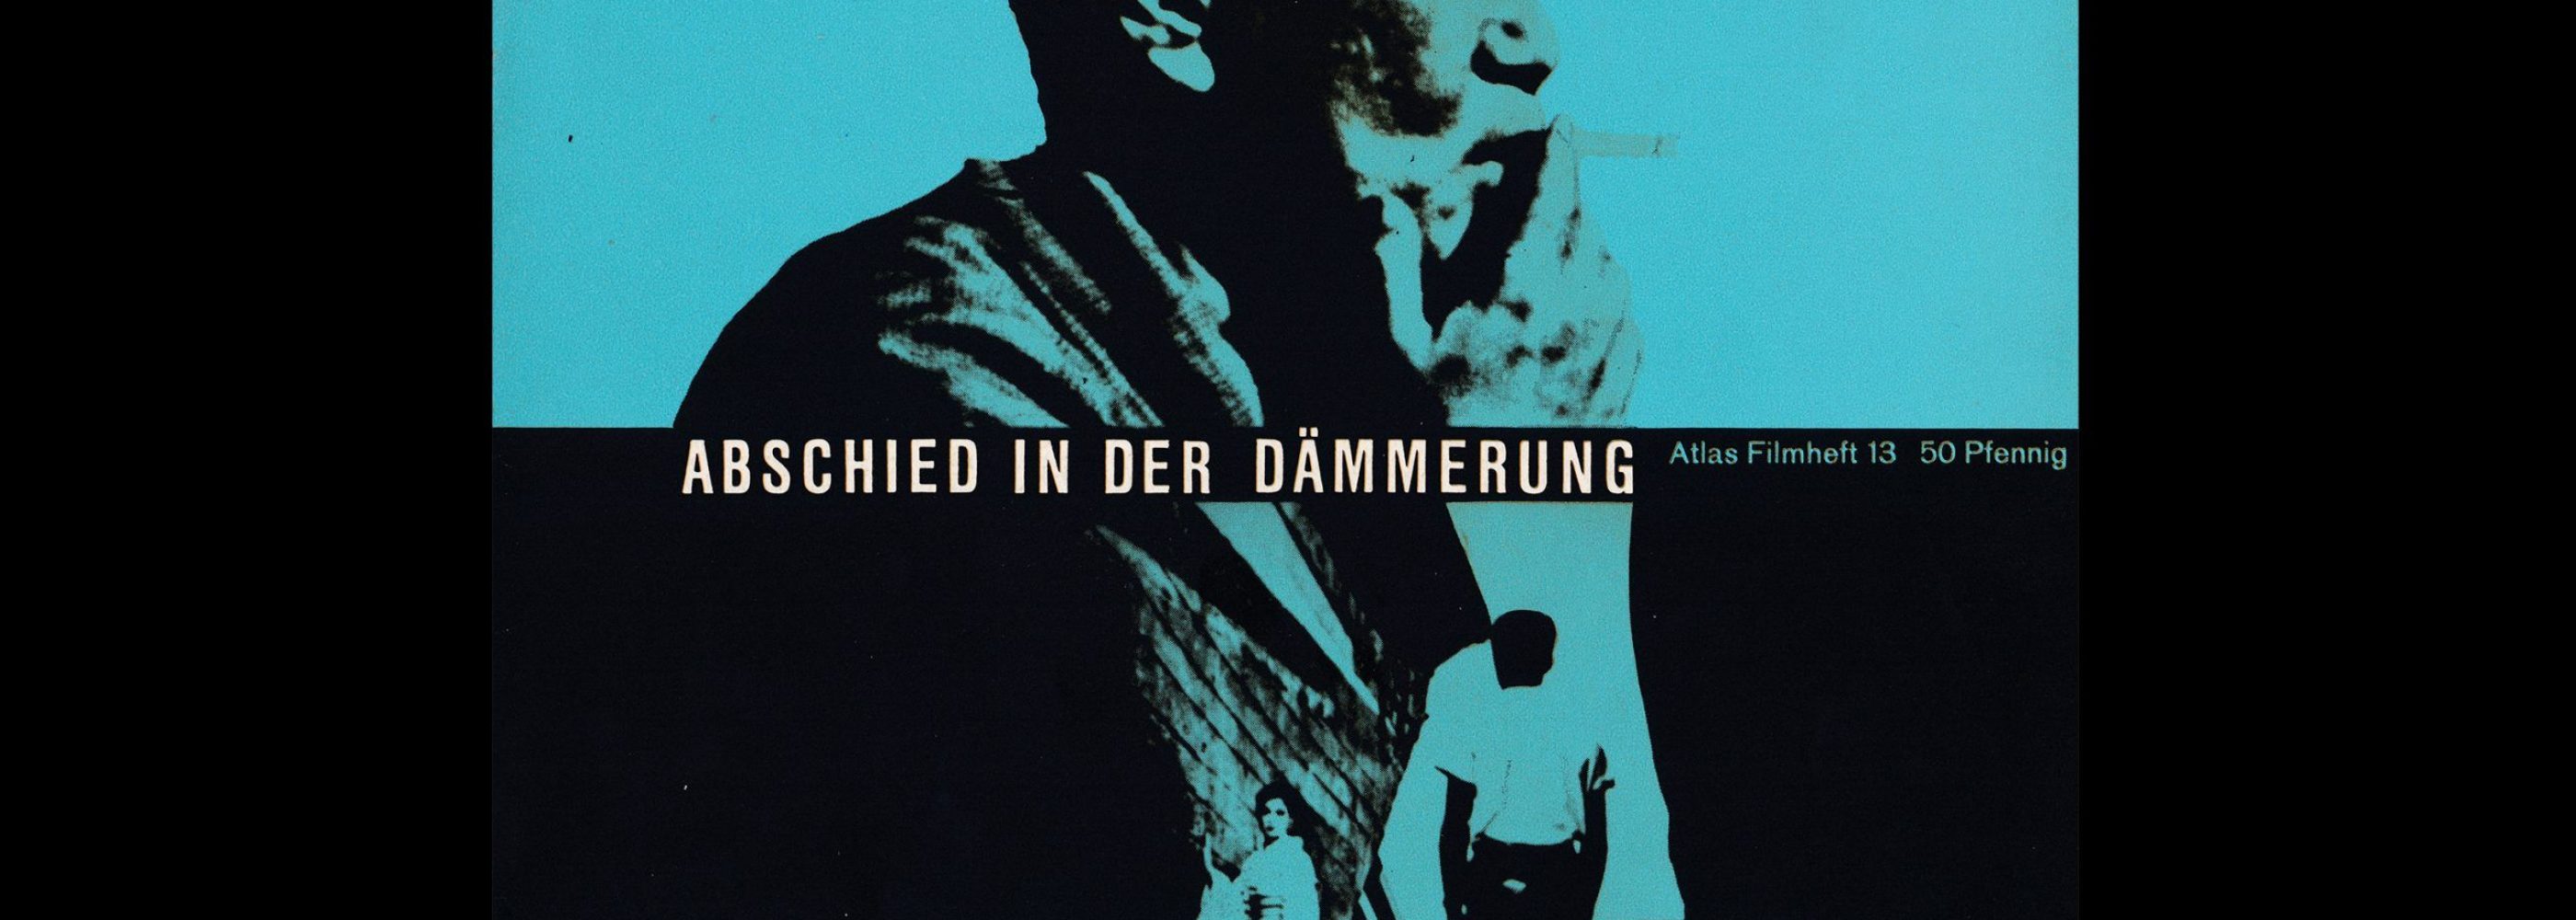 Atlas Filmheft 13 - Abschied in der Dämmerung designed by Isolde Baumgart